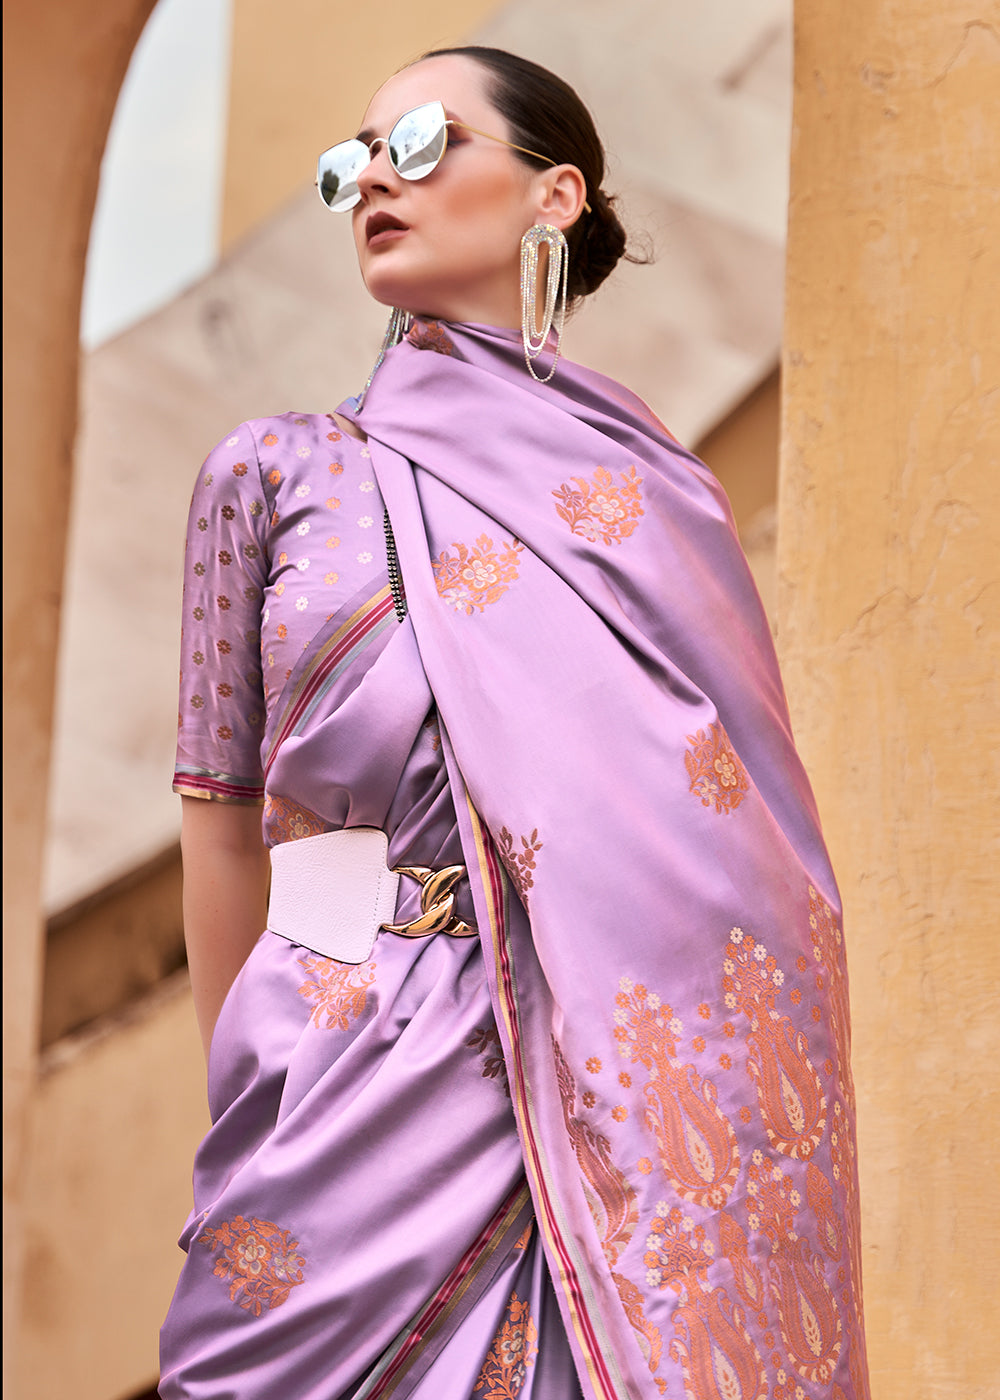 Buy Now Lilac Purple Pure Satin Zari Weaving Wedding Festive Saree Online in USA, UK, Canada & Worldwide at Empress Clothing. 